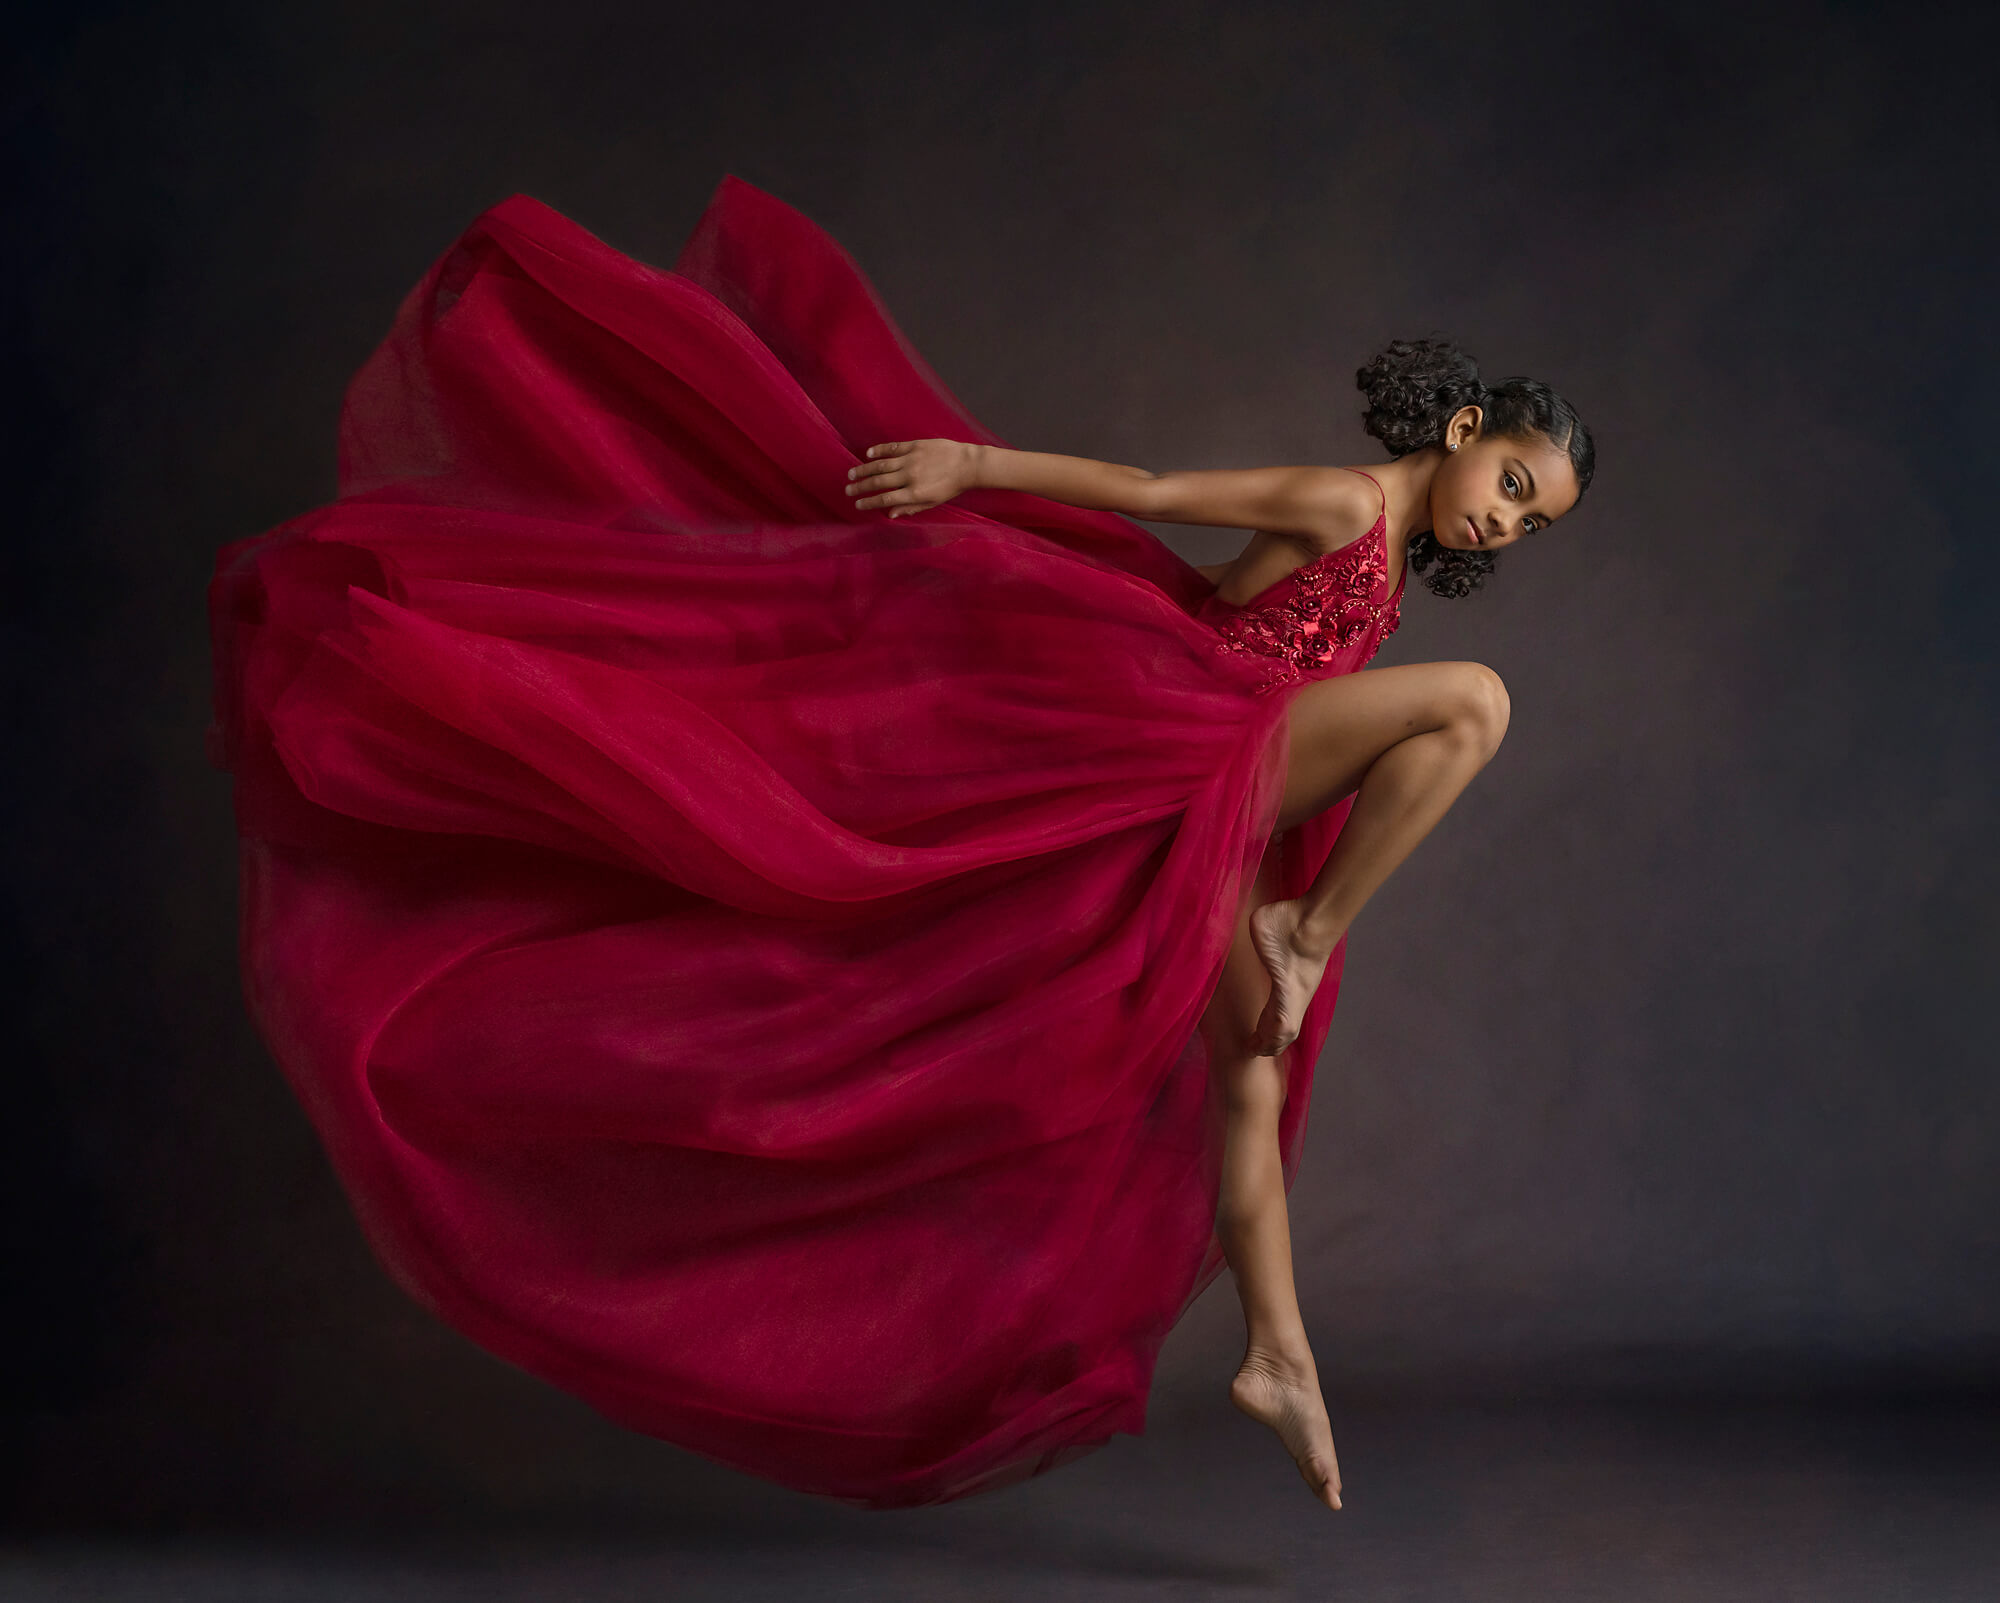 Torrance, ca dancer girl jumping in red dress